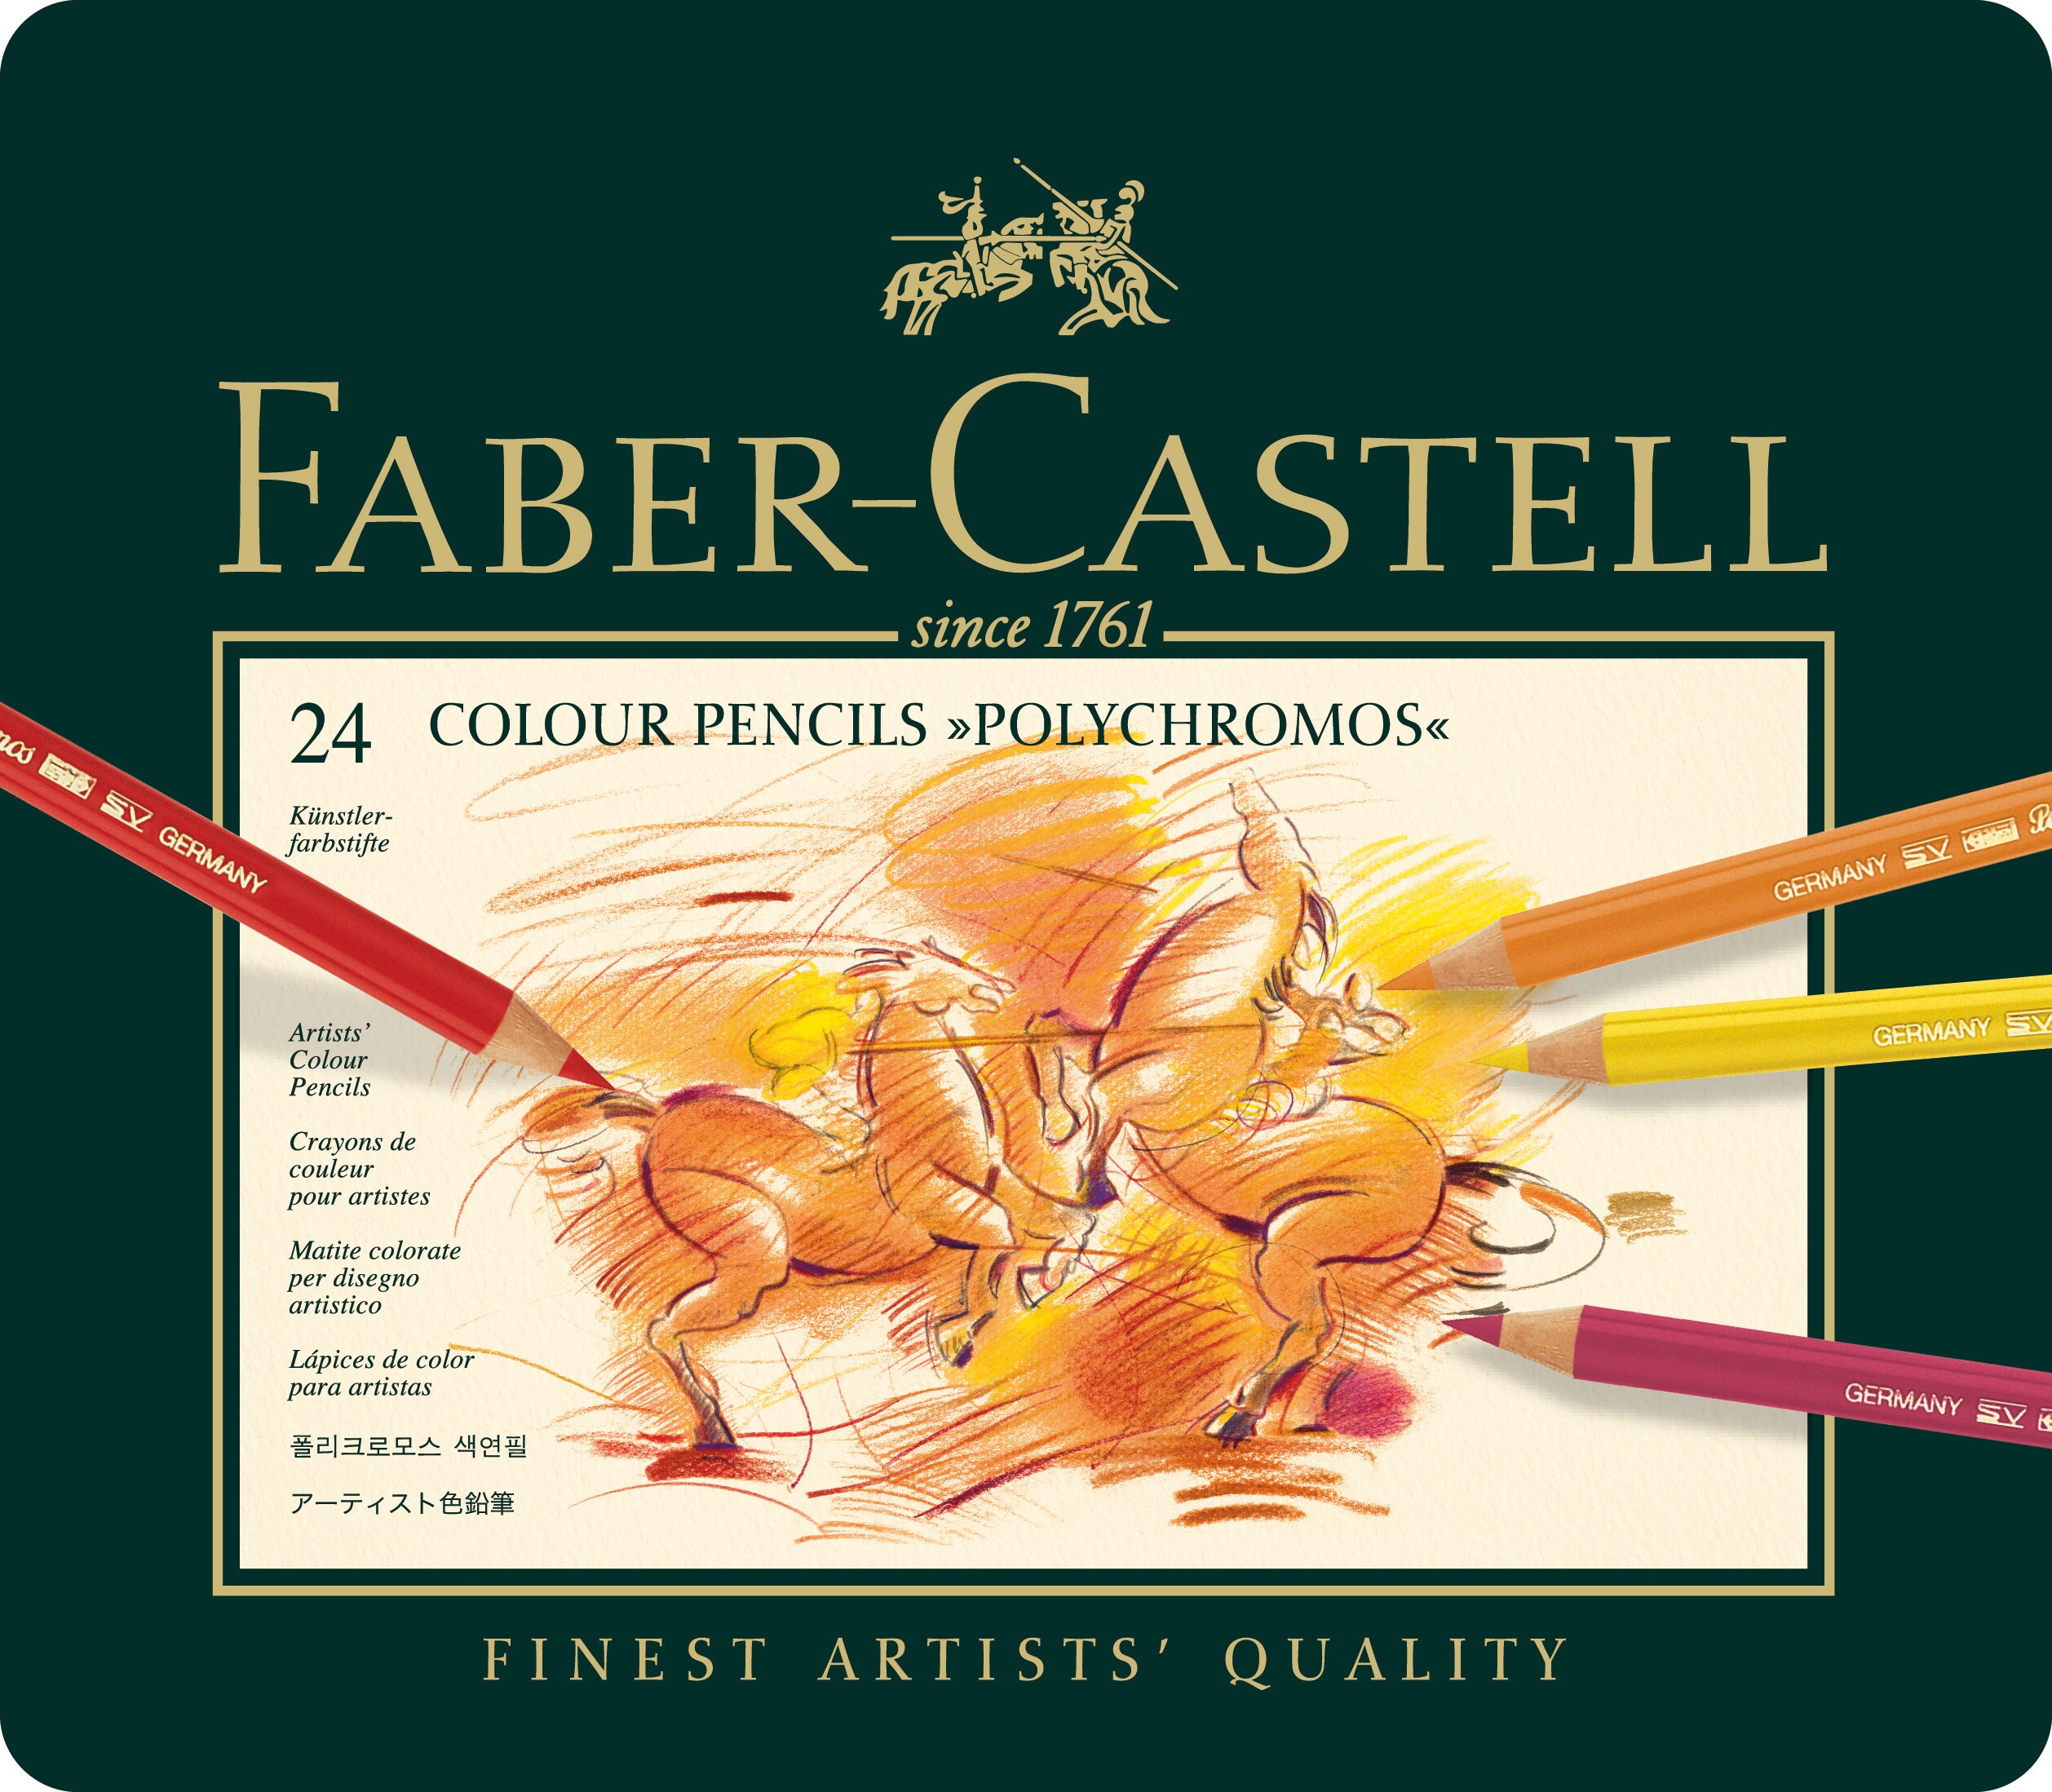 Faber-Castell Do Art Watercolor Pencil Art Kit- Pine Wood- Adult Size- 10  Watercolor EcoPencils- Instruction Booklet